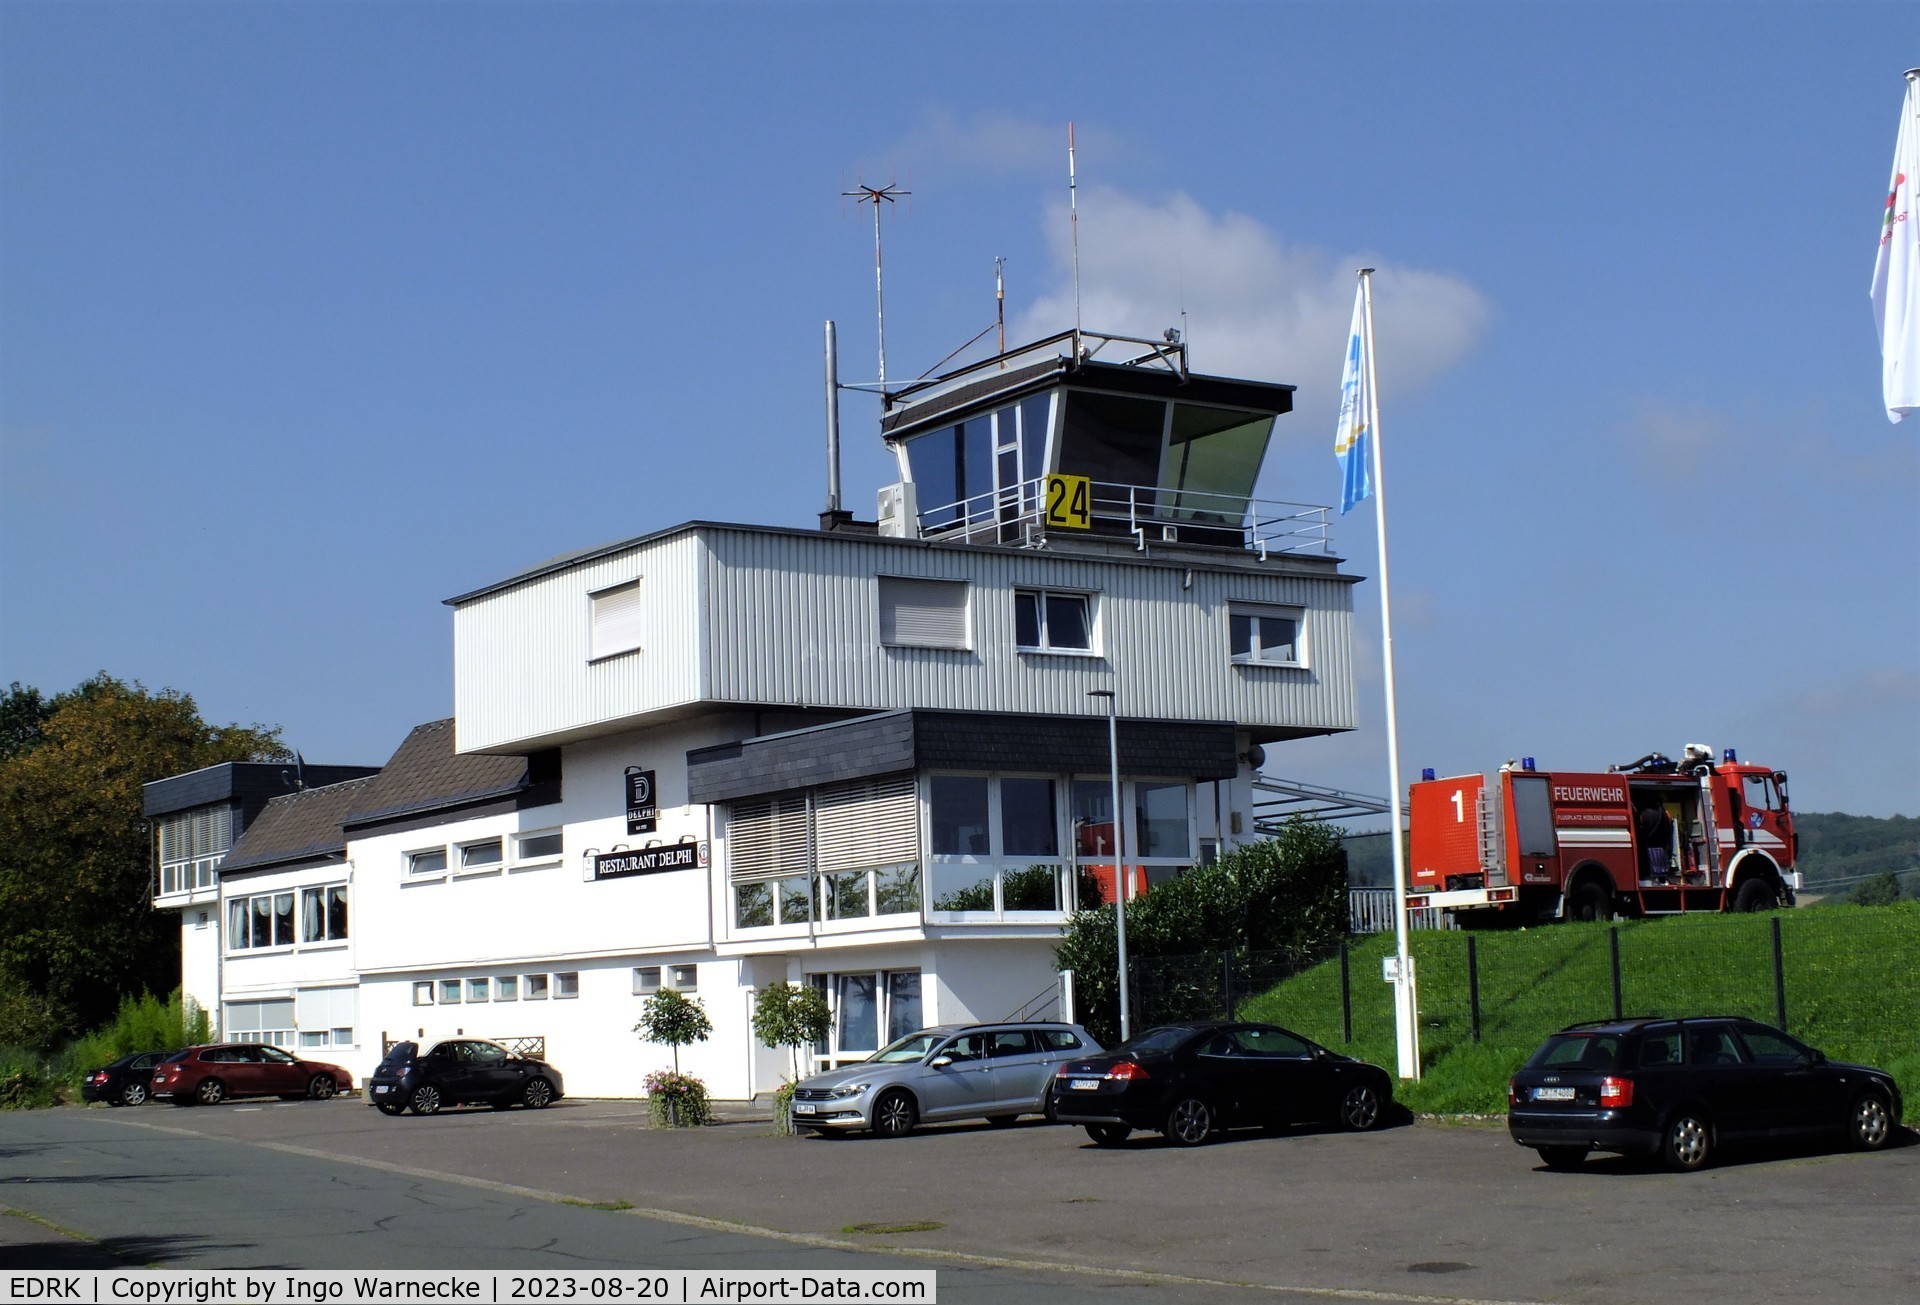 Koblenz Winningen Airport, Winningen, Mosel Germany (EDRK) - landside view of terminal, tower and airfield restaurant at Koblenz-Winningen airfield